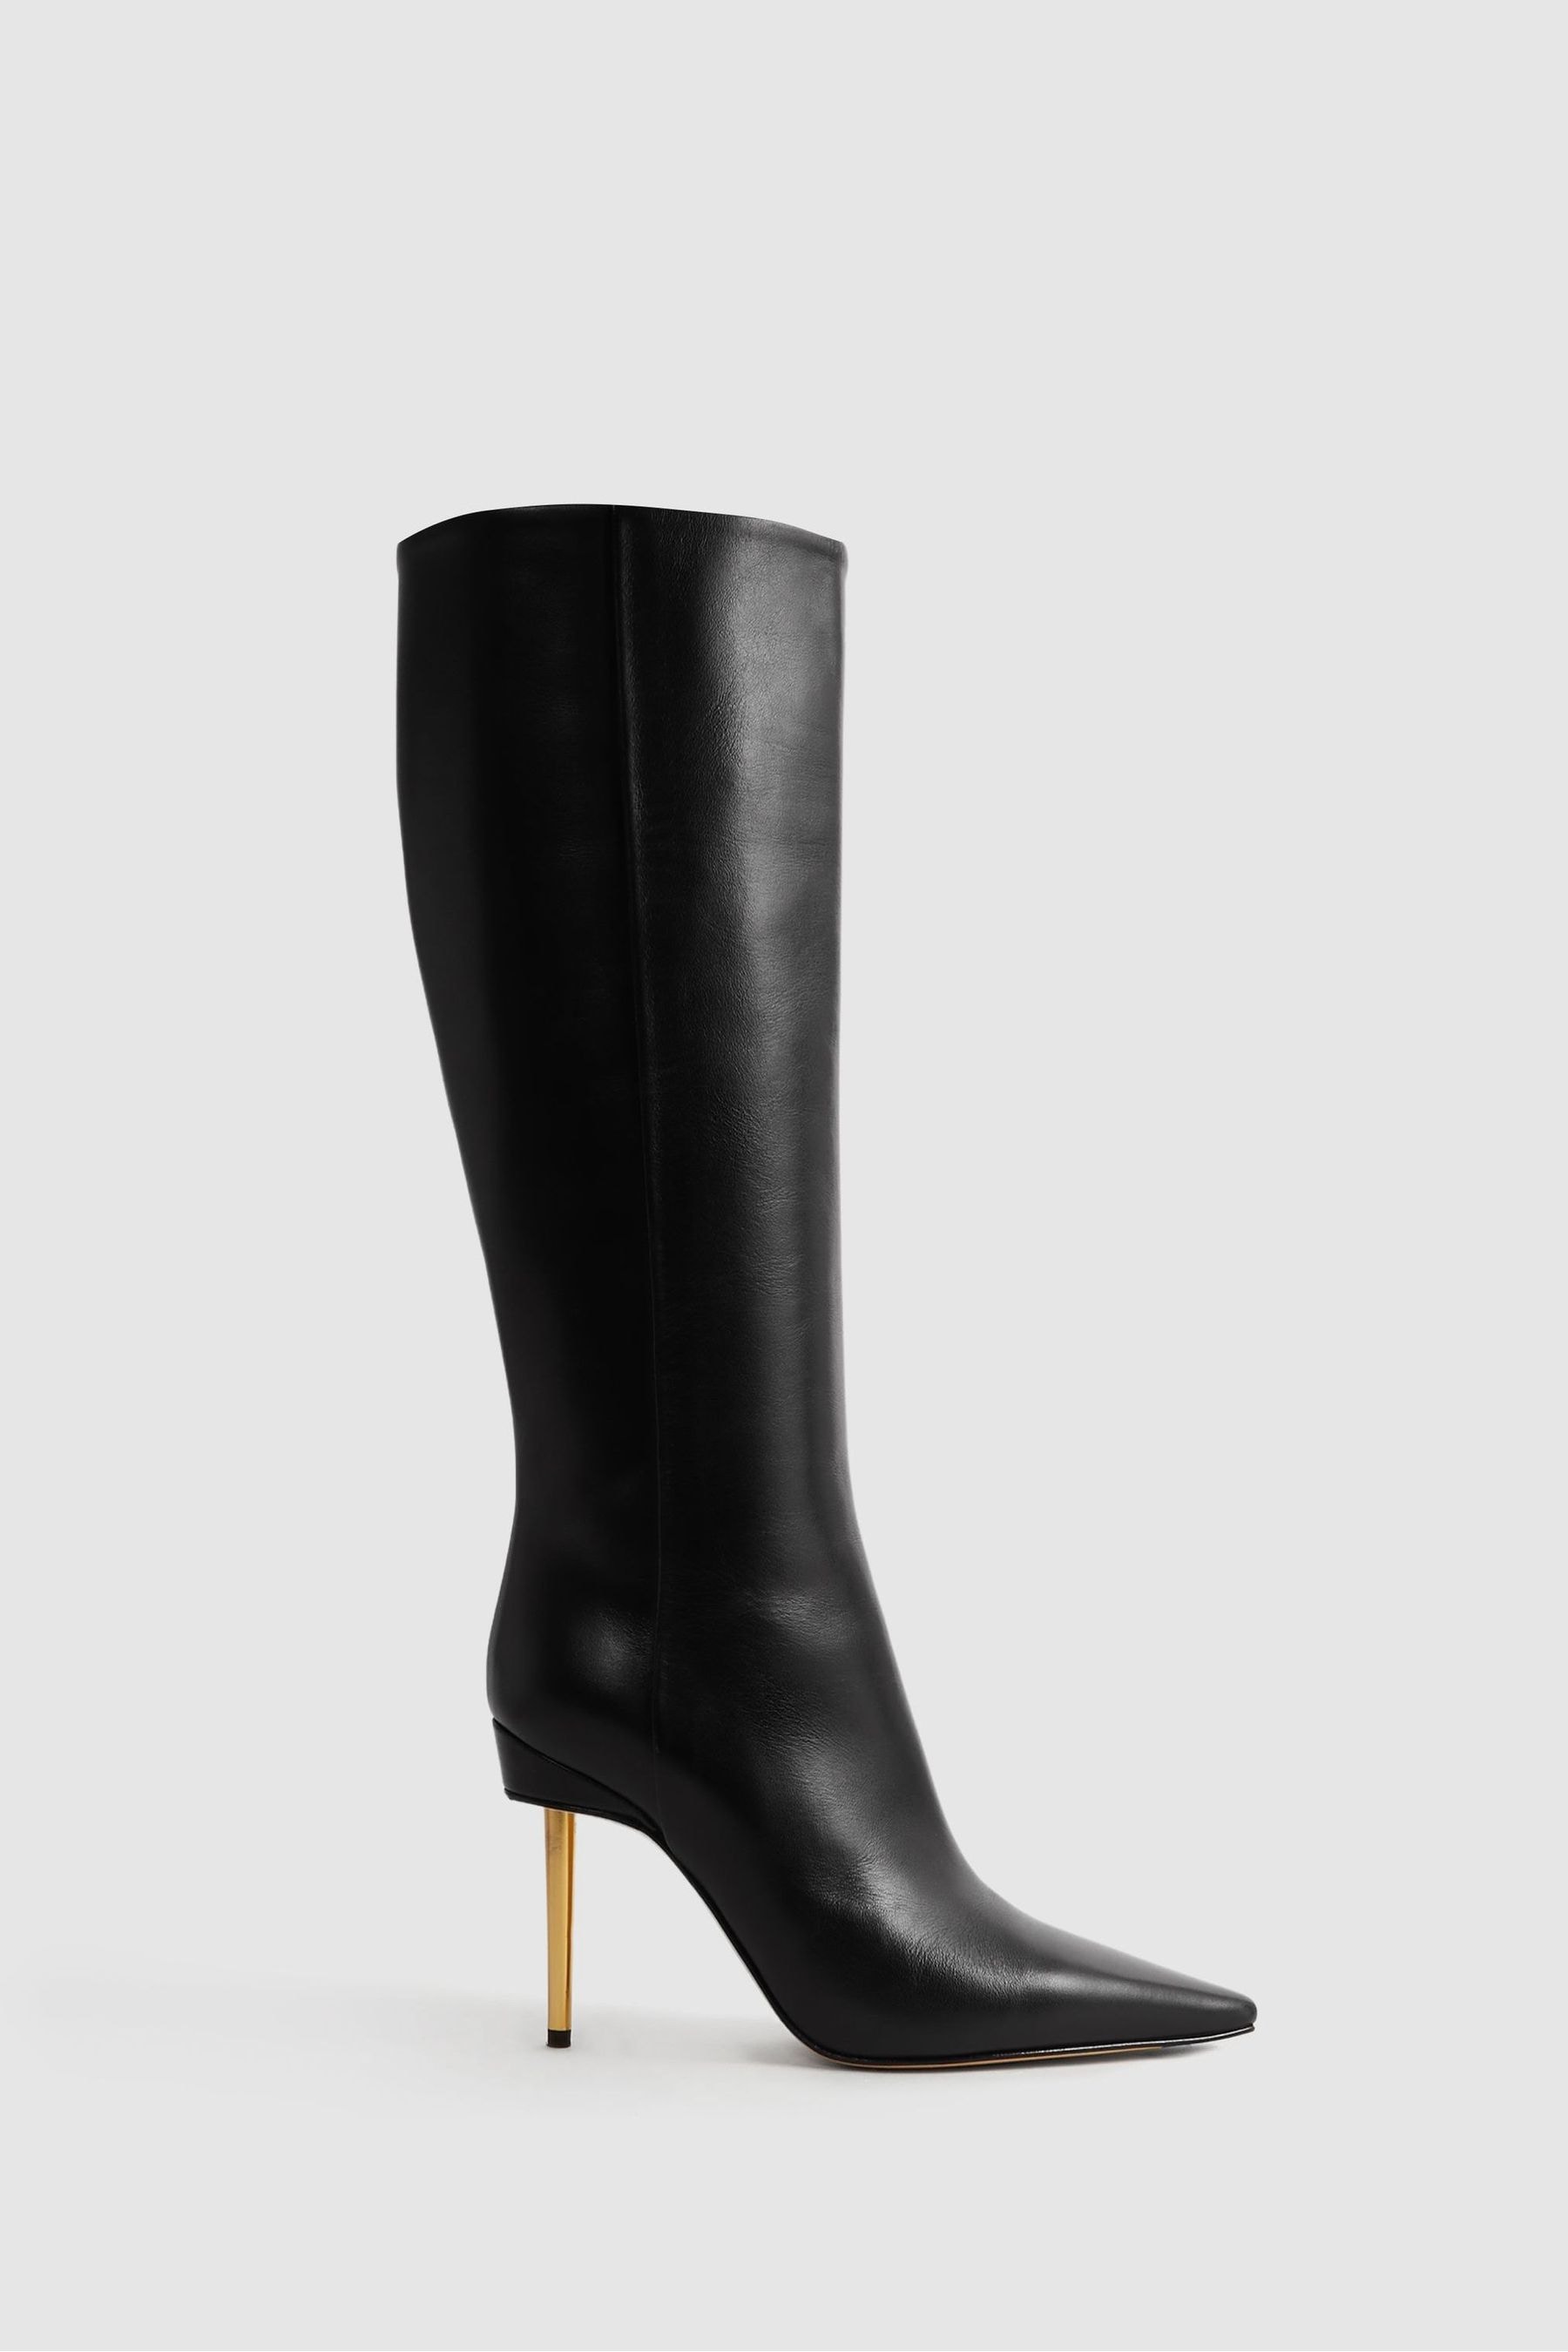 Reiss Naomi - Black Atelier Italian Leather Heeled Knee-high Boots, Uk 3 Eu 36